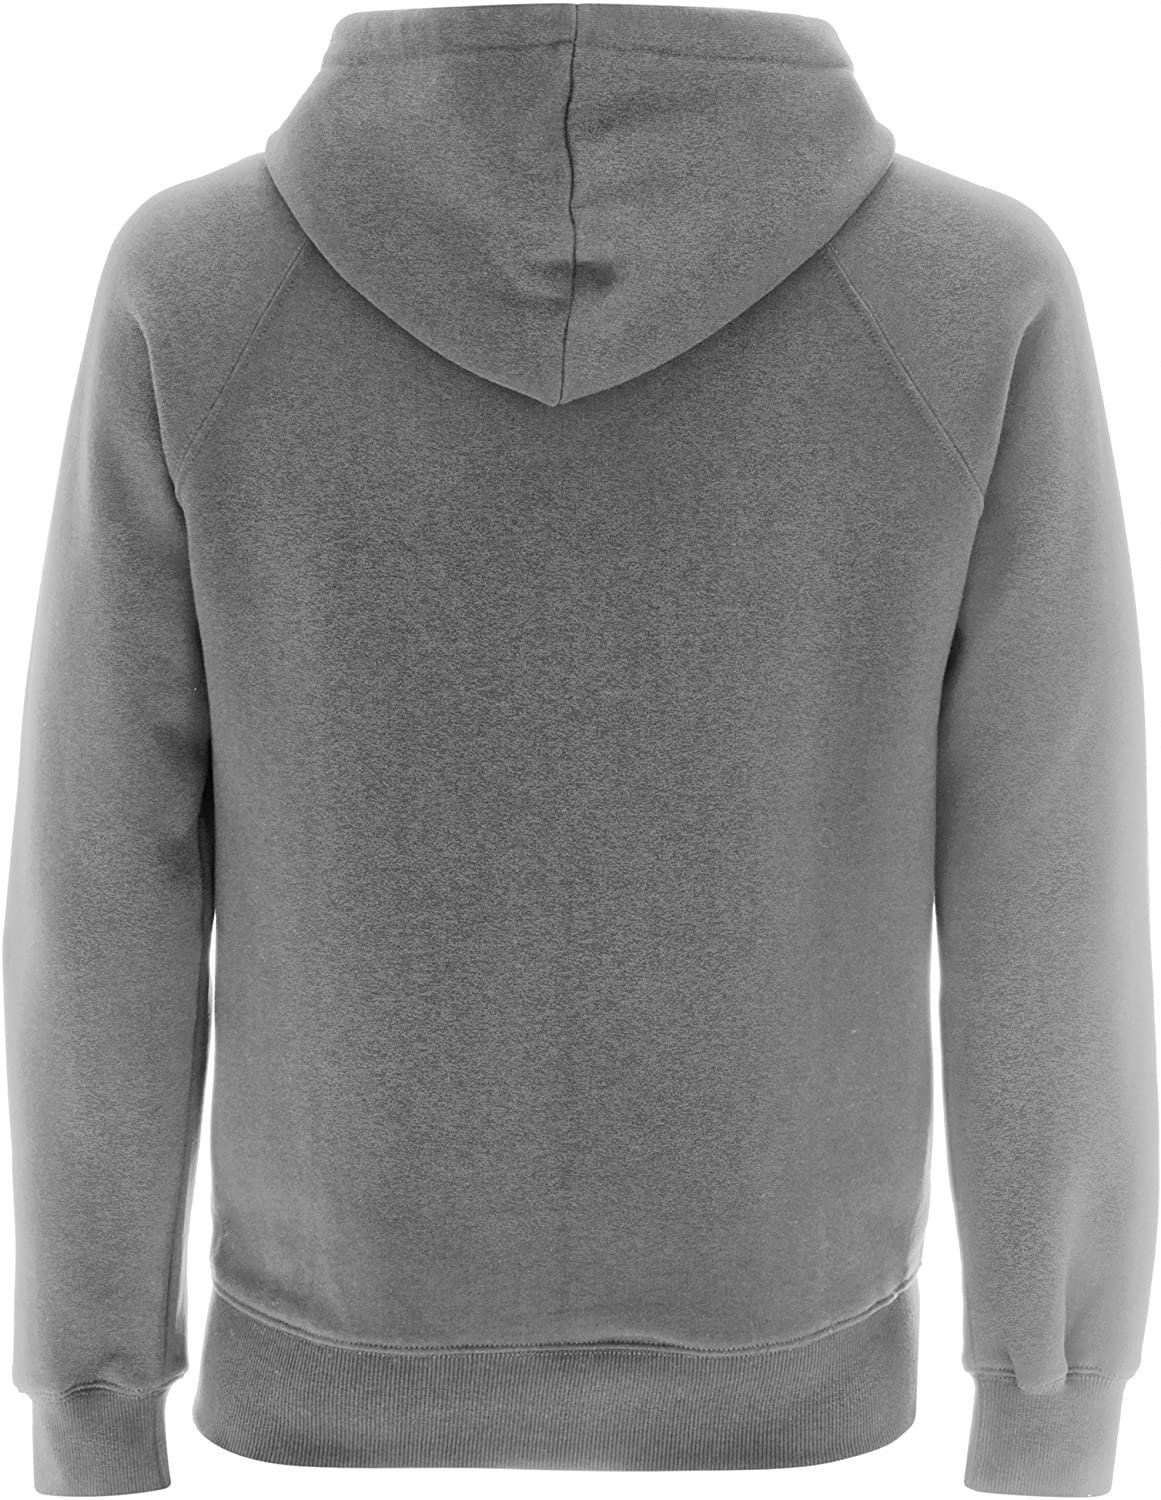 Underhood of London Pullover Hoodie for Men Mens Hooded Pull On Sweatshirt Cotton Fleece Jacket